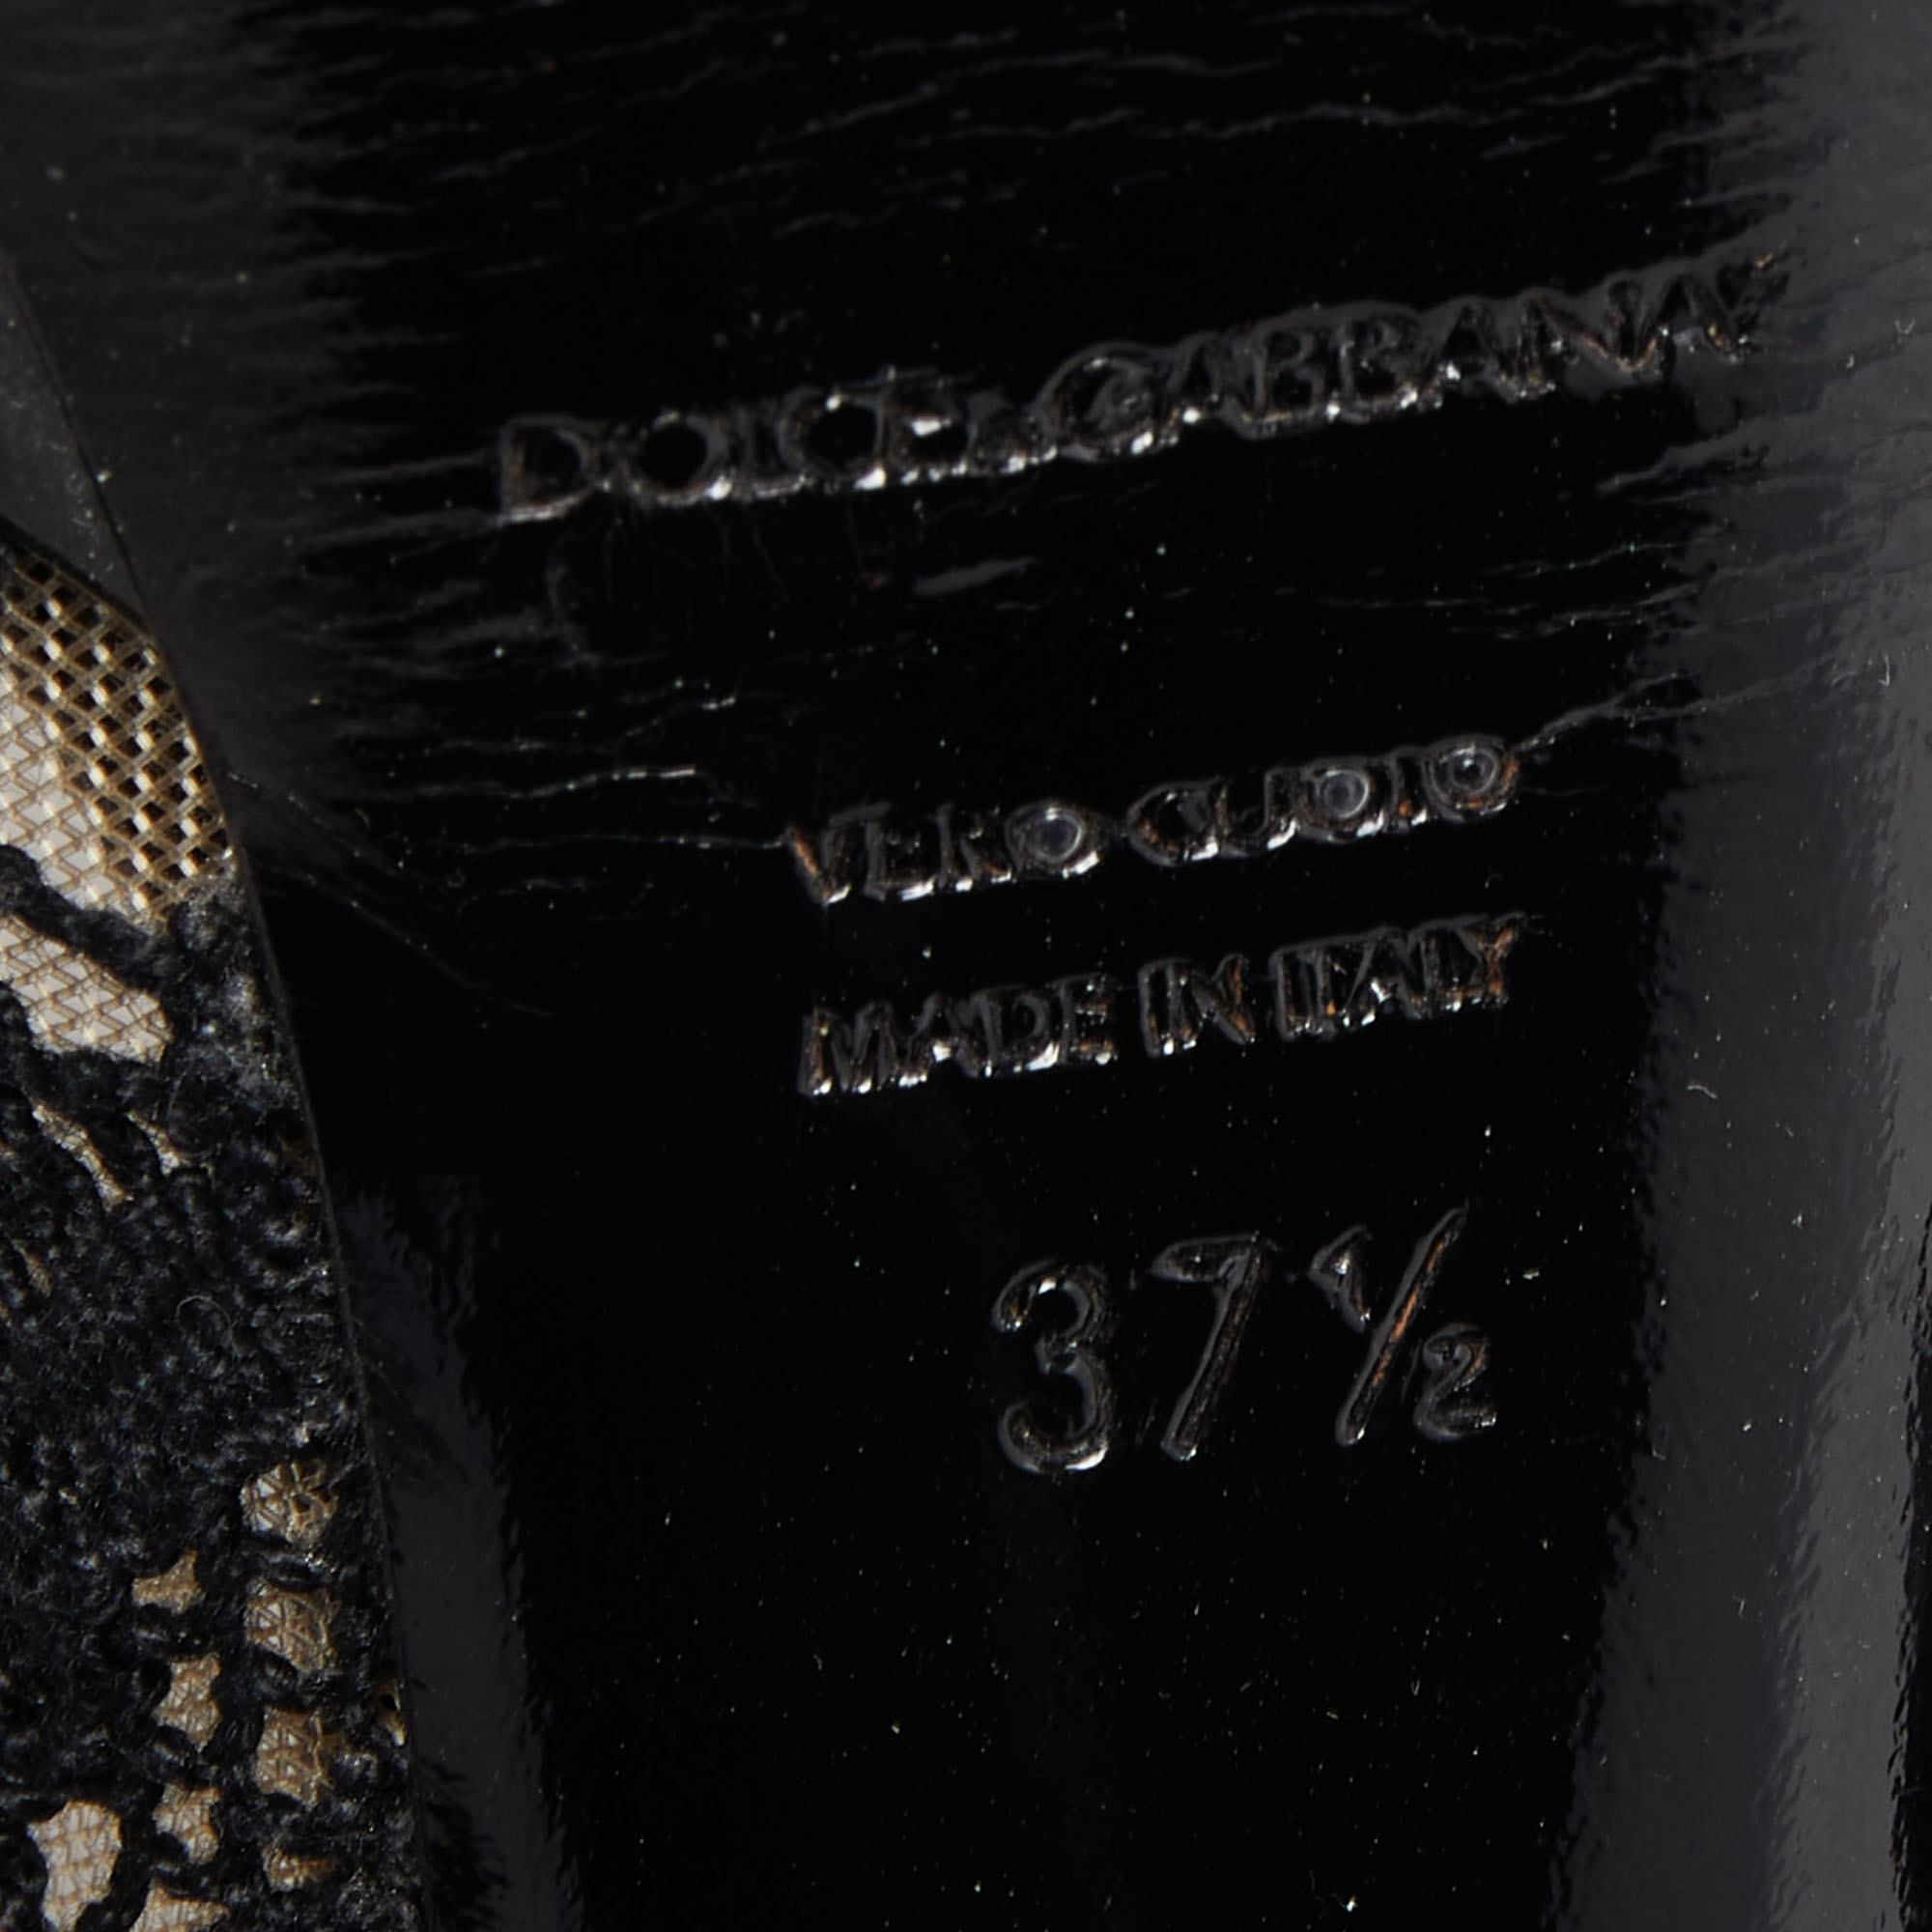 Dolce & Gabbana Black Lace Peep Toe Platform Slingback Pumps Size 37.5